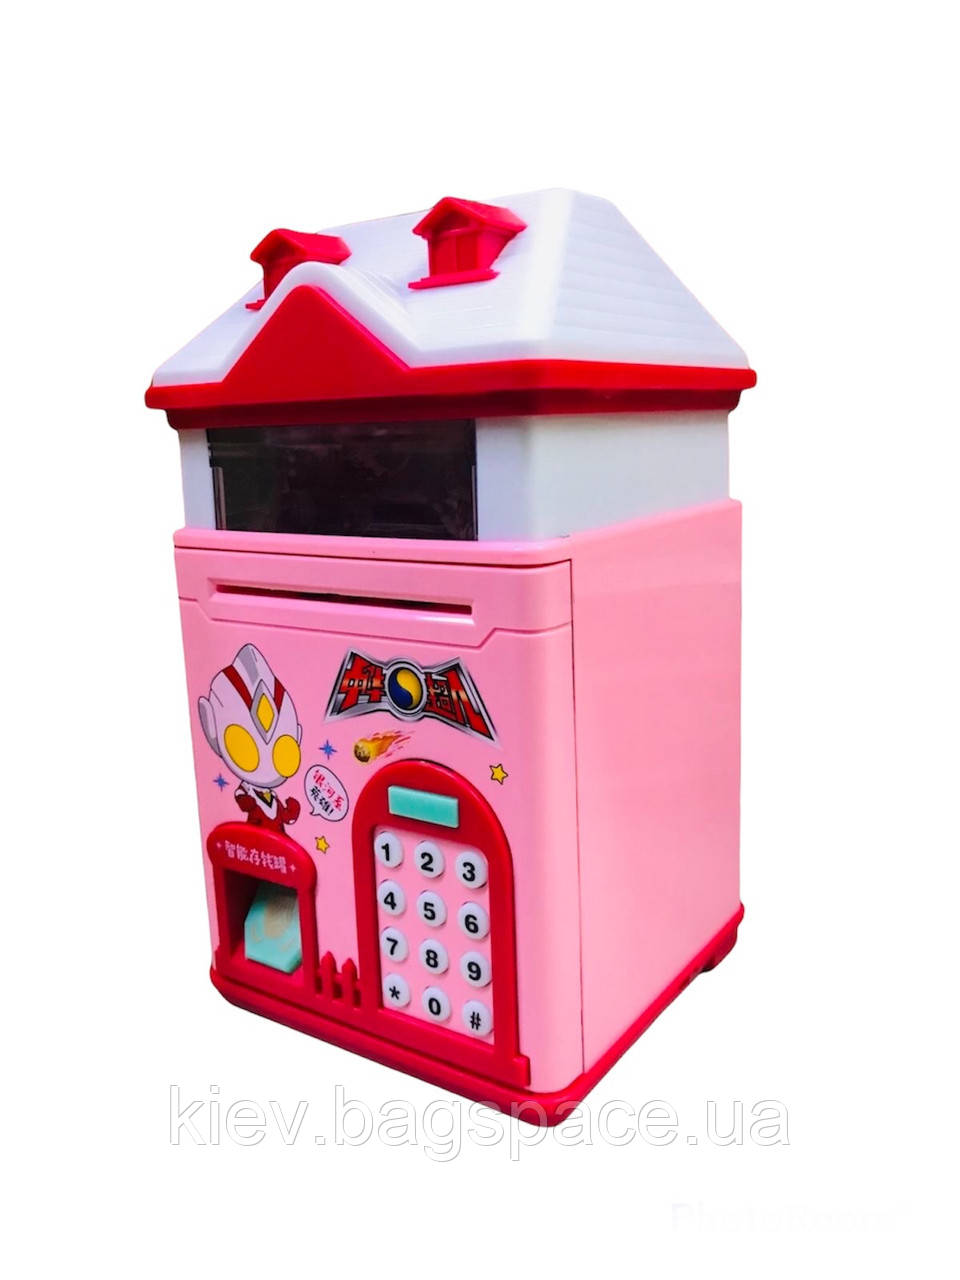 Скарбничка Музична Будиночок, рожевий EL 510-8 KB, код: 7339424